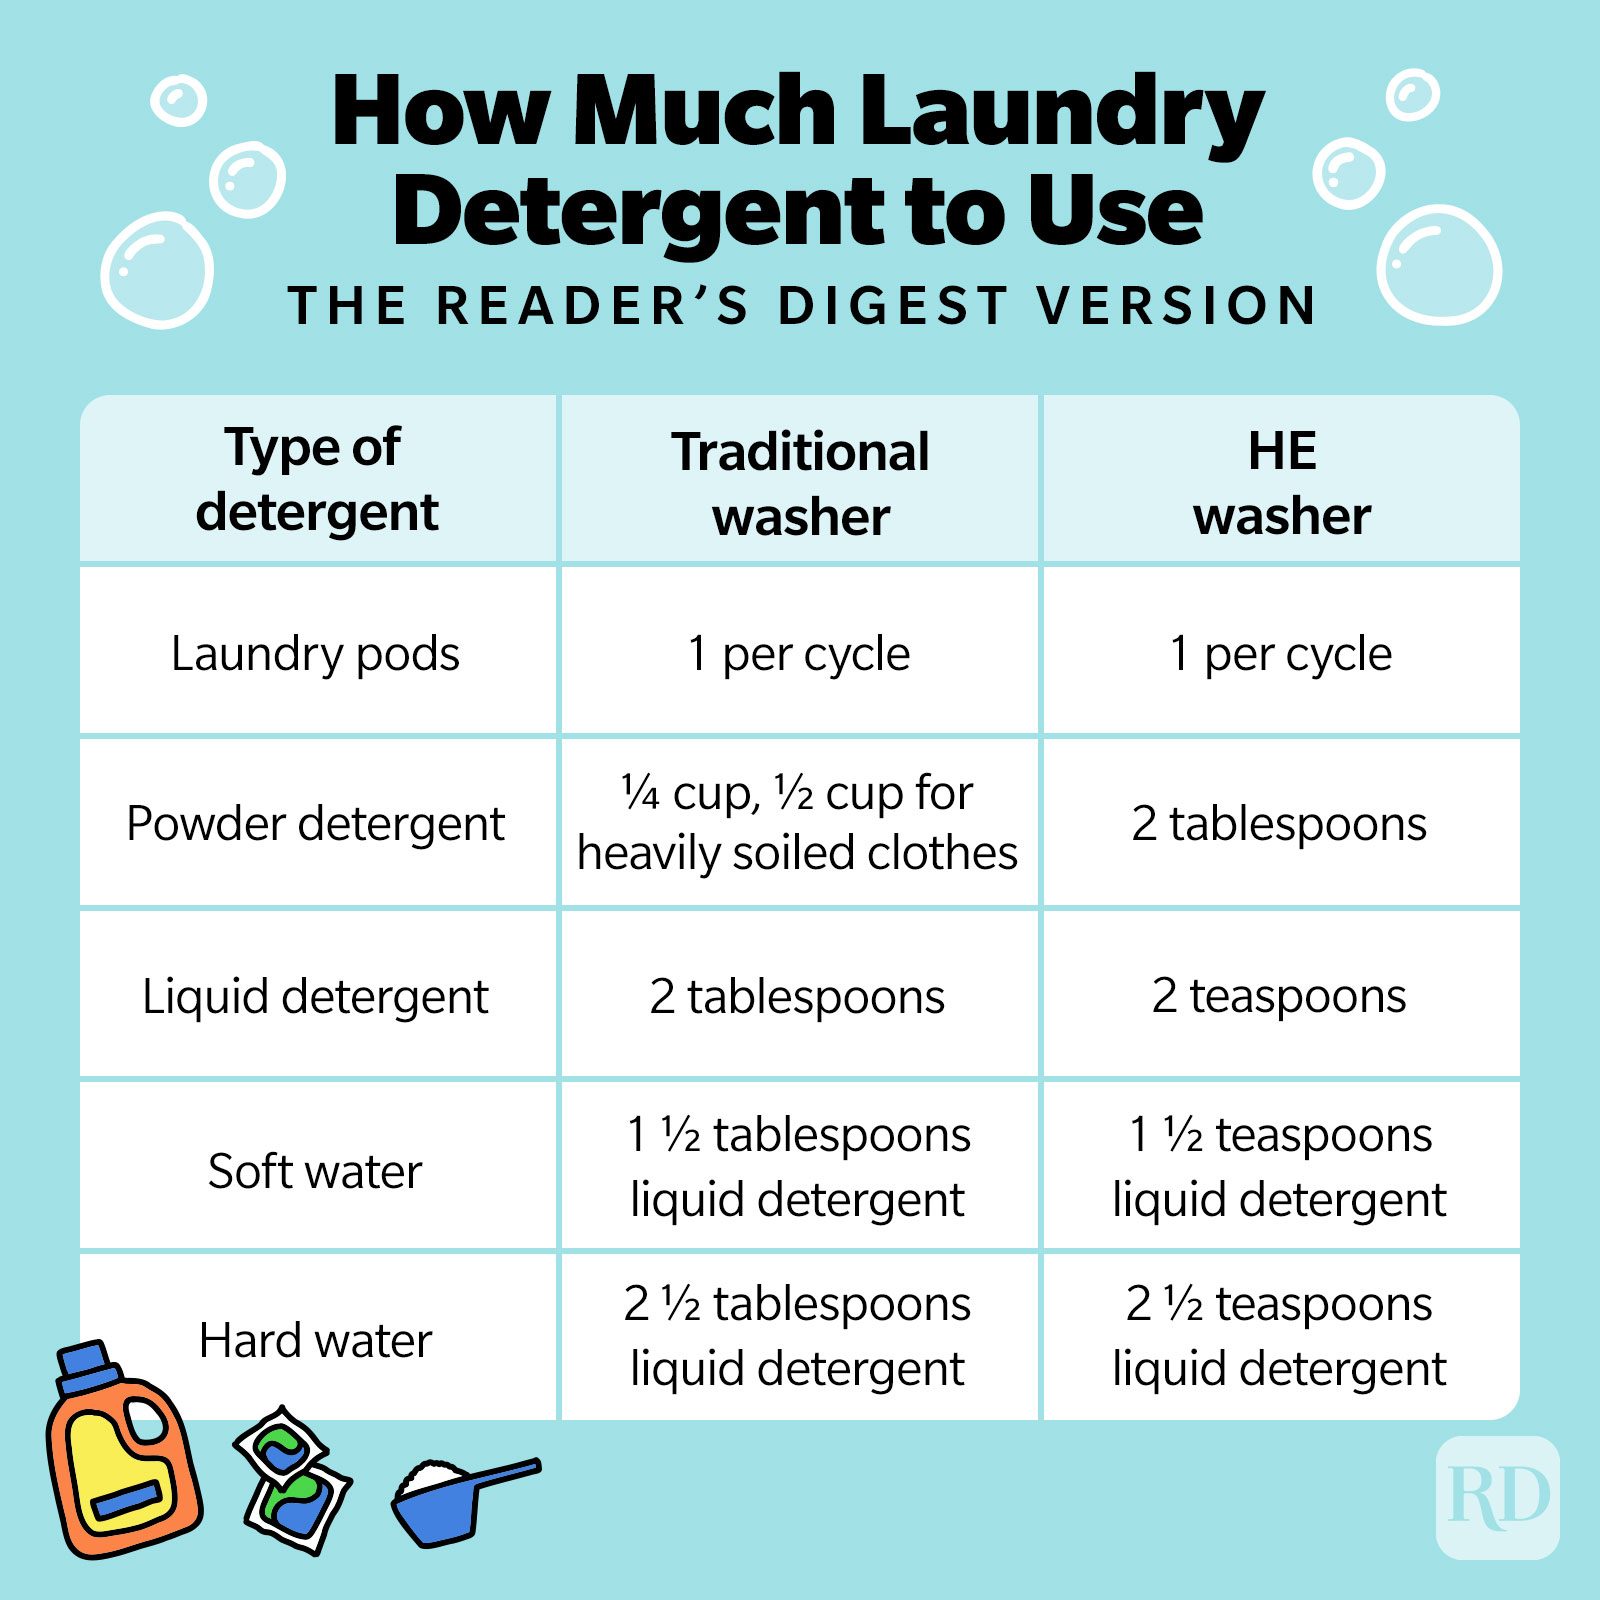 Laundry Detergent Sheets vs. Liquid Detergent: Which Wo – HeySunday